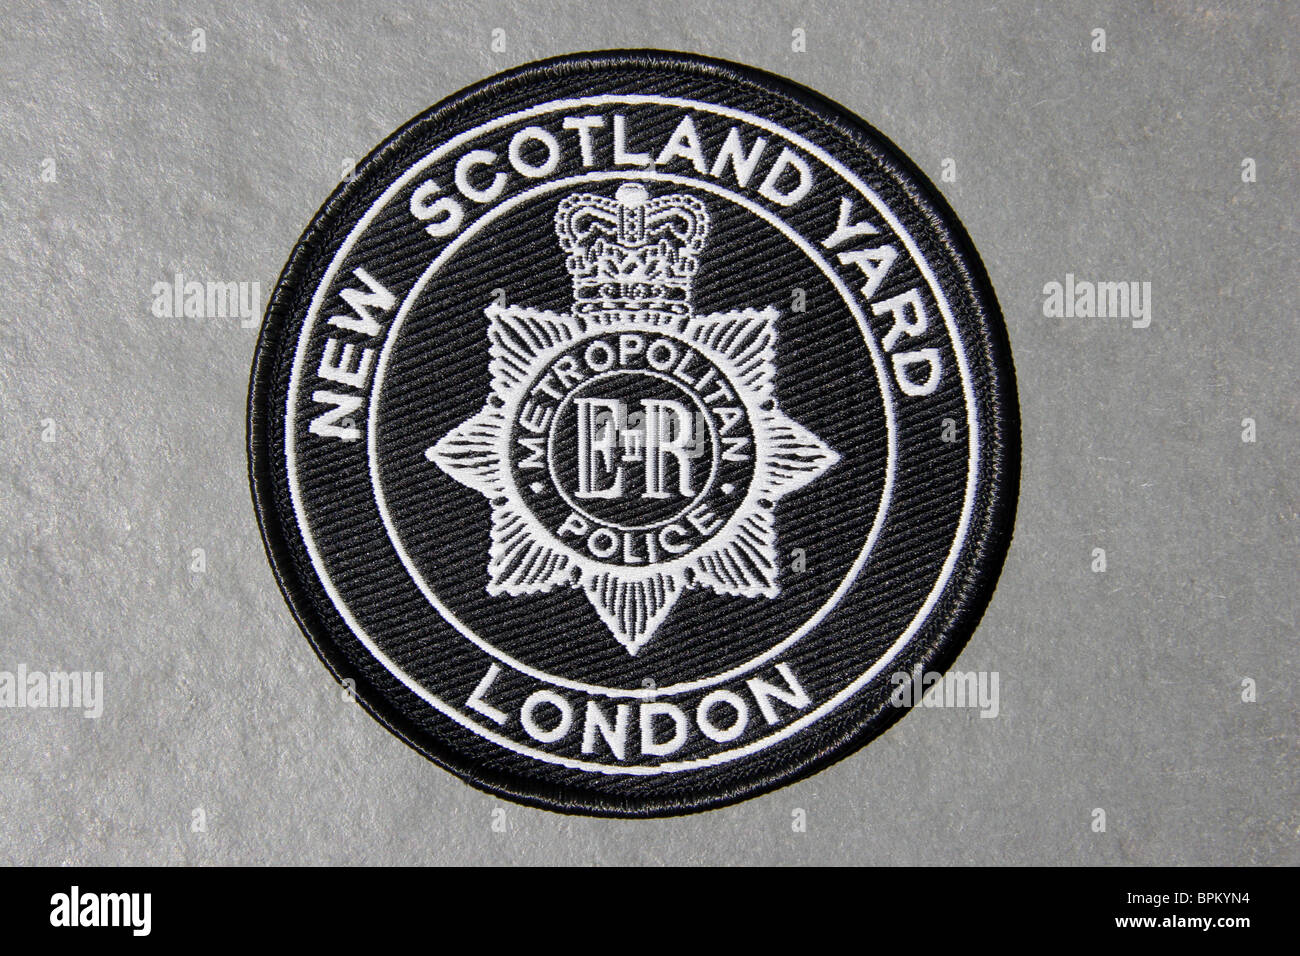 New Scotland Yard, Metropolitan Police patch, London Stock Photo